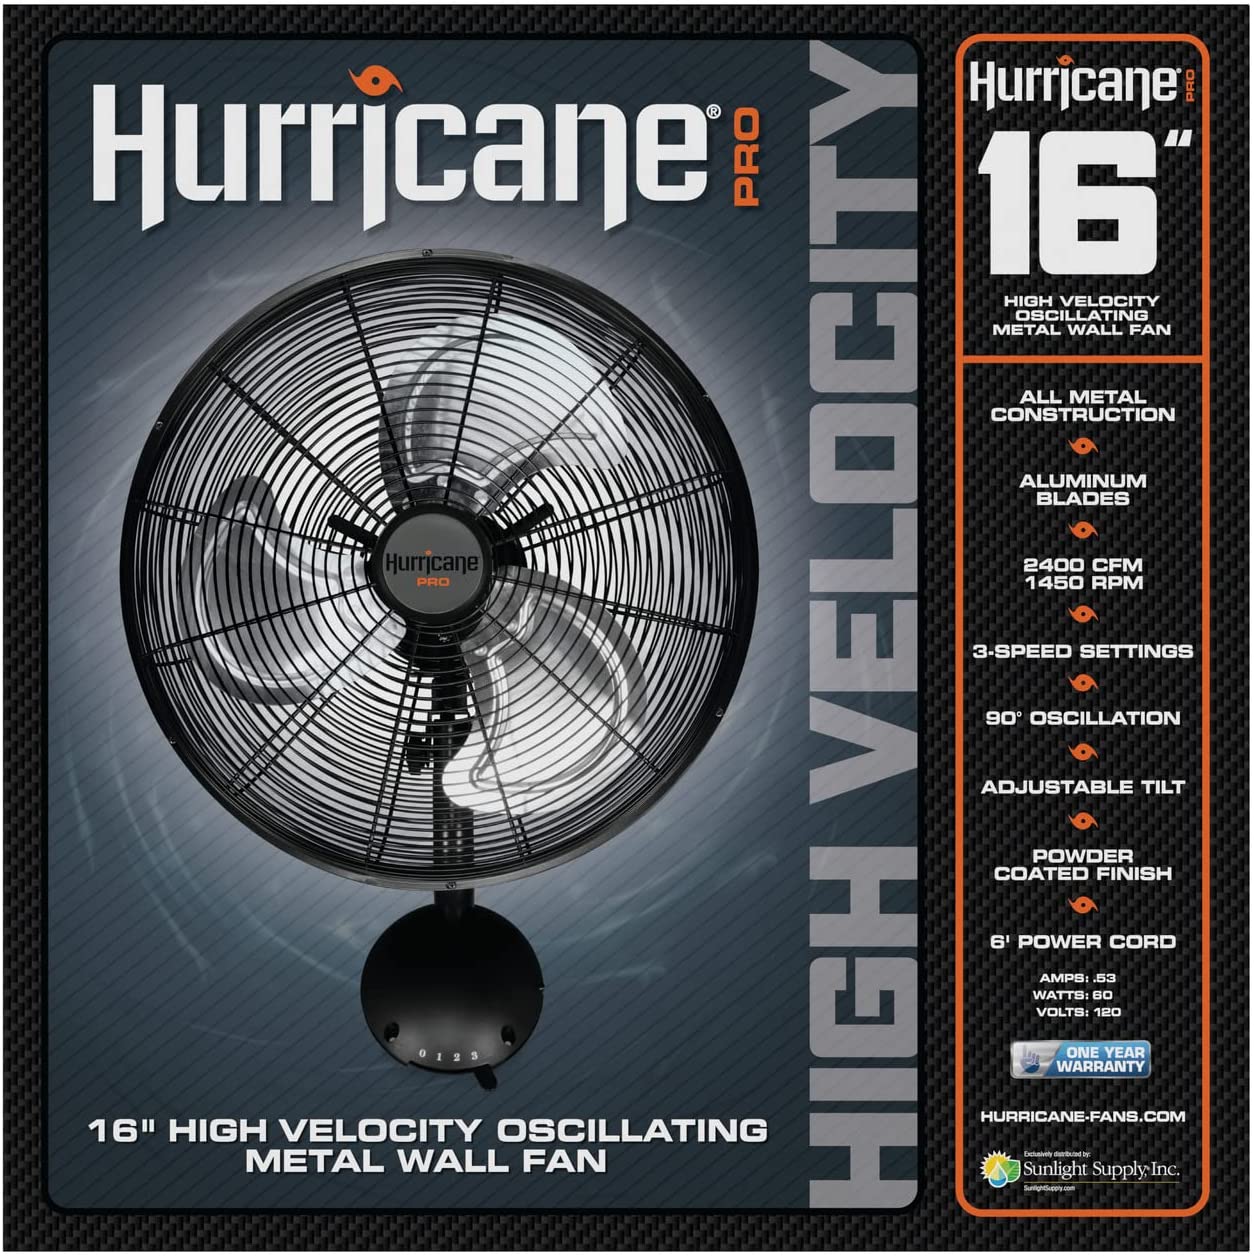 Hurricane® Pro High Velocity Oscillating Metal Wall Mount Fan 16" - HGC736484